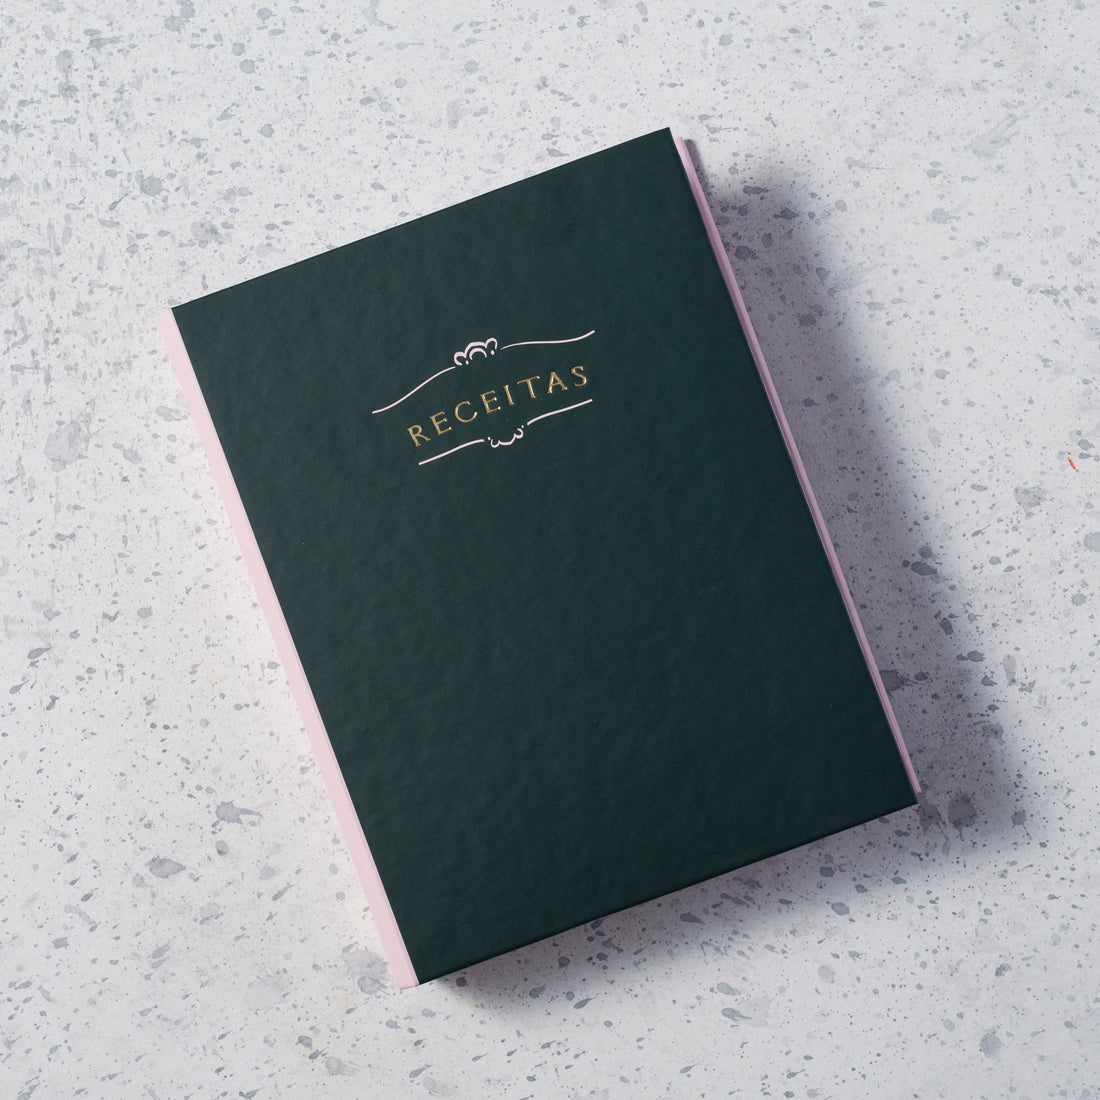 caderno de receitas verde escuro com hot stamp dourado sobre fundo marmorizado